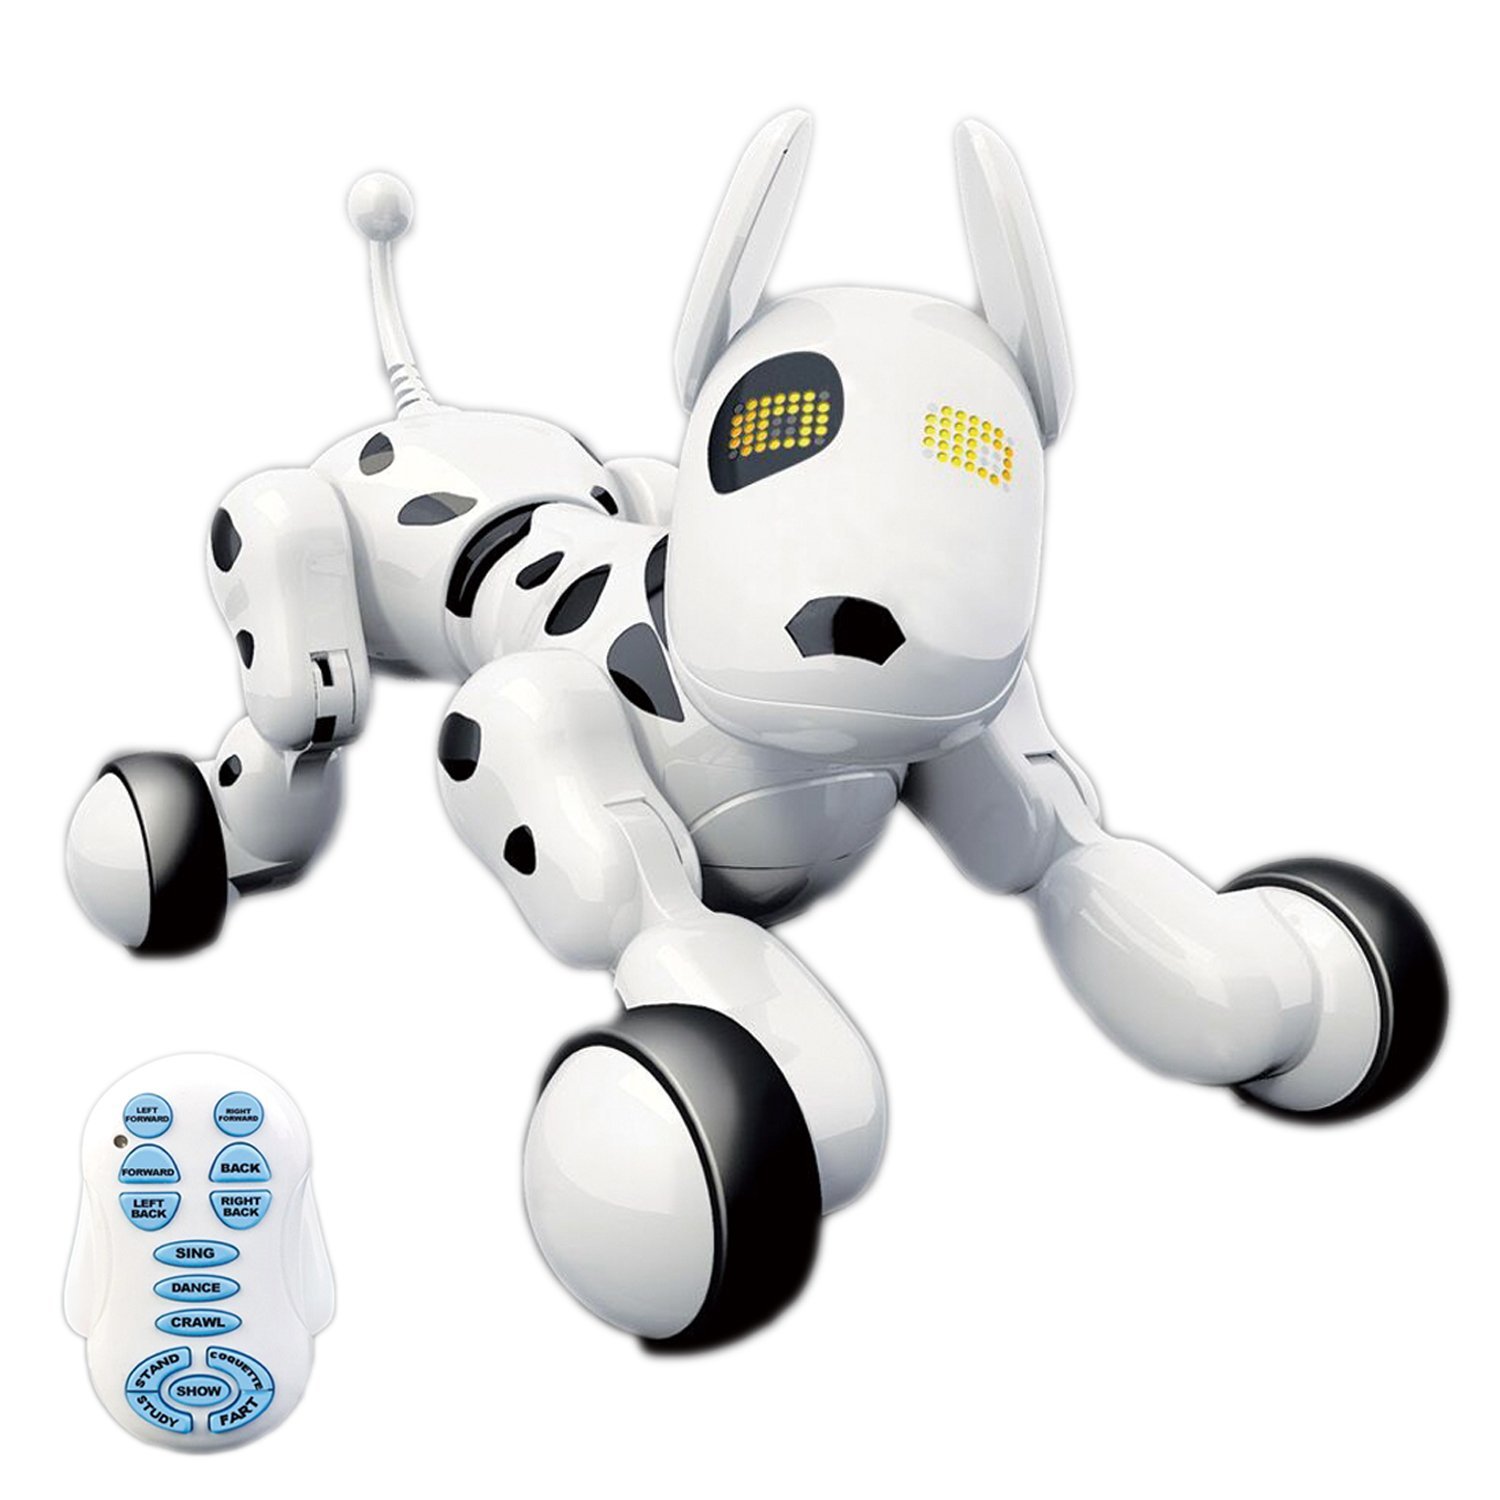 Amazon.com: Hi-Tech Wireless Remote Control Robot Interactive Puppy ...